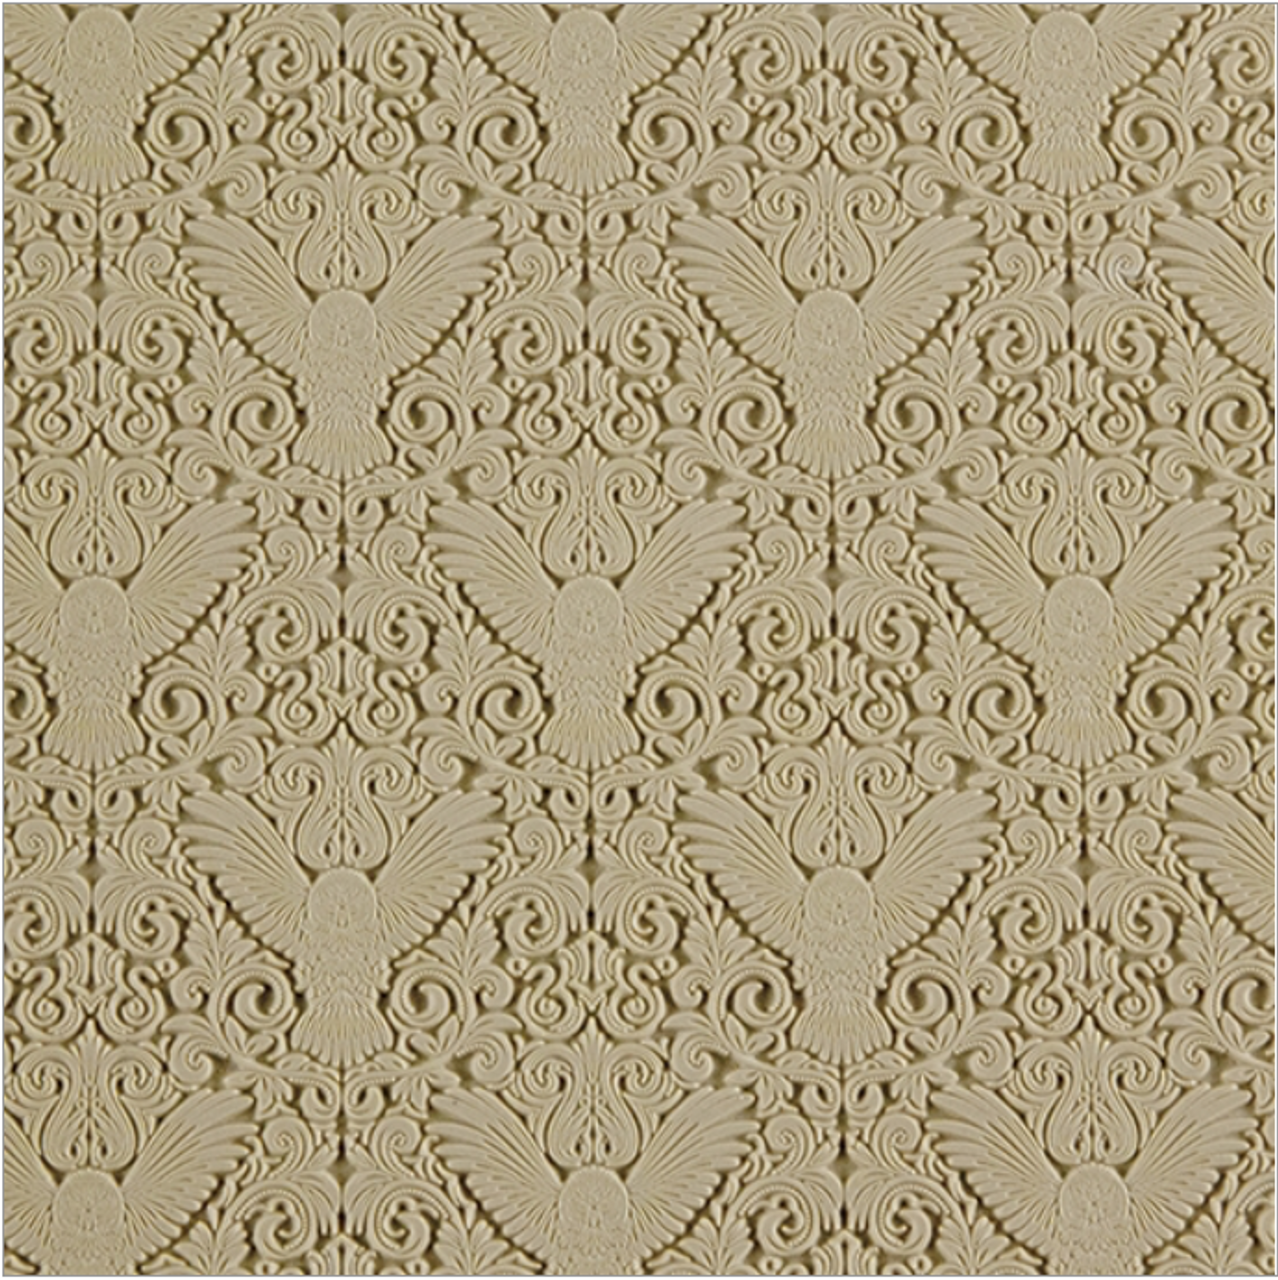 Easy Release Texture Tile - Owl's Nest